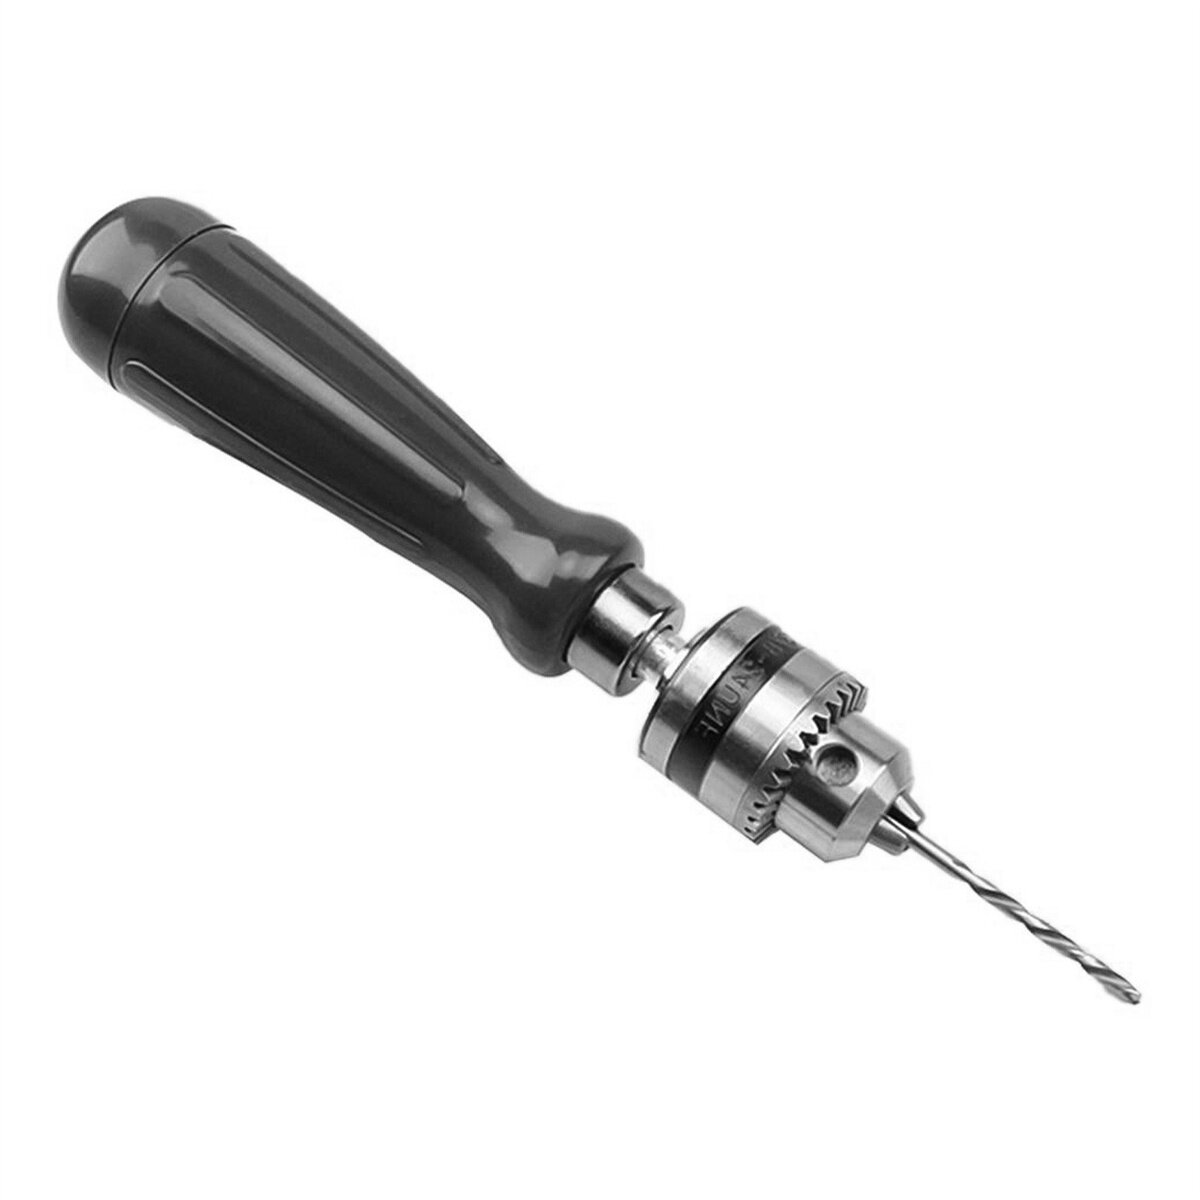 Hand Drill Bits Set Manual Tool Pin Vises with Twist Drill Bits Chuck Key Hollow Storage Box 0.6-6mm Precision Clamping COD